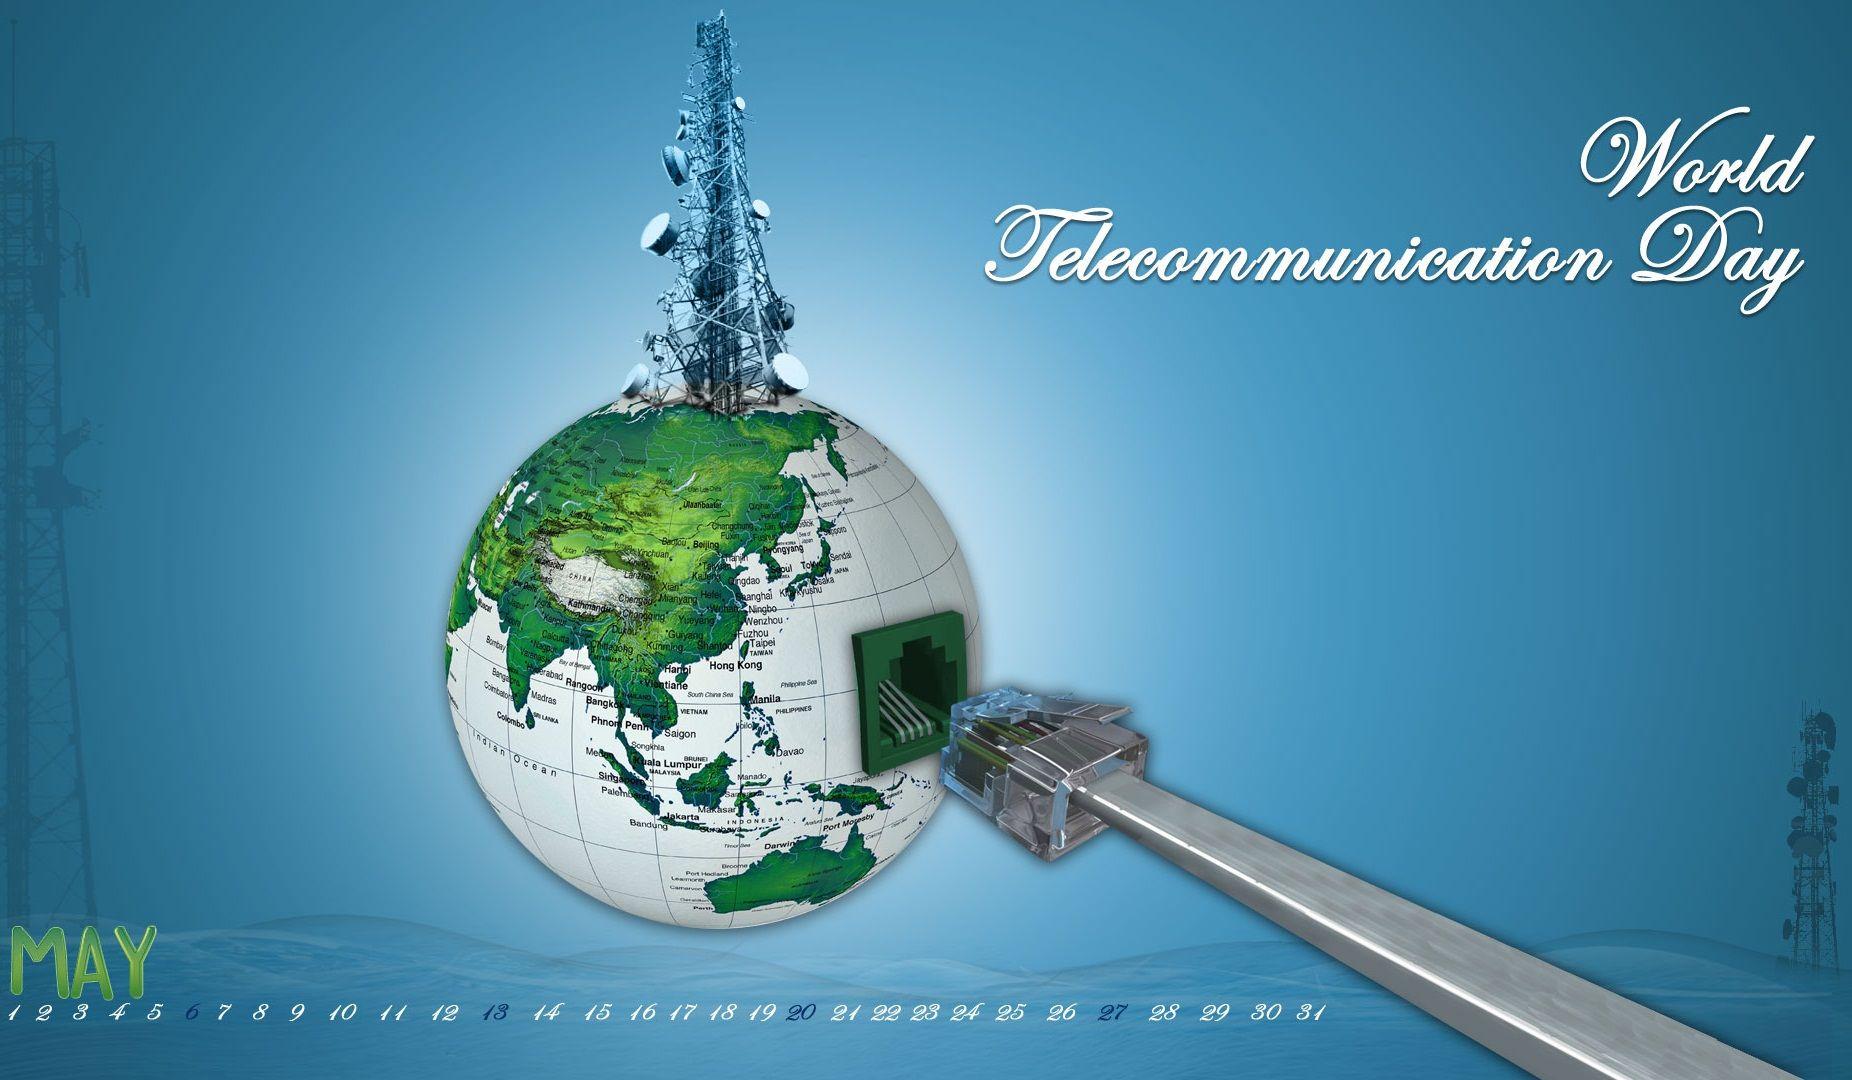 World Telecommunication Day Picture, Image